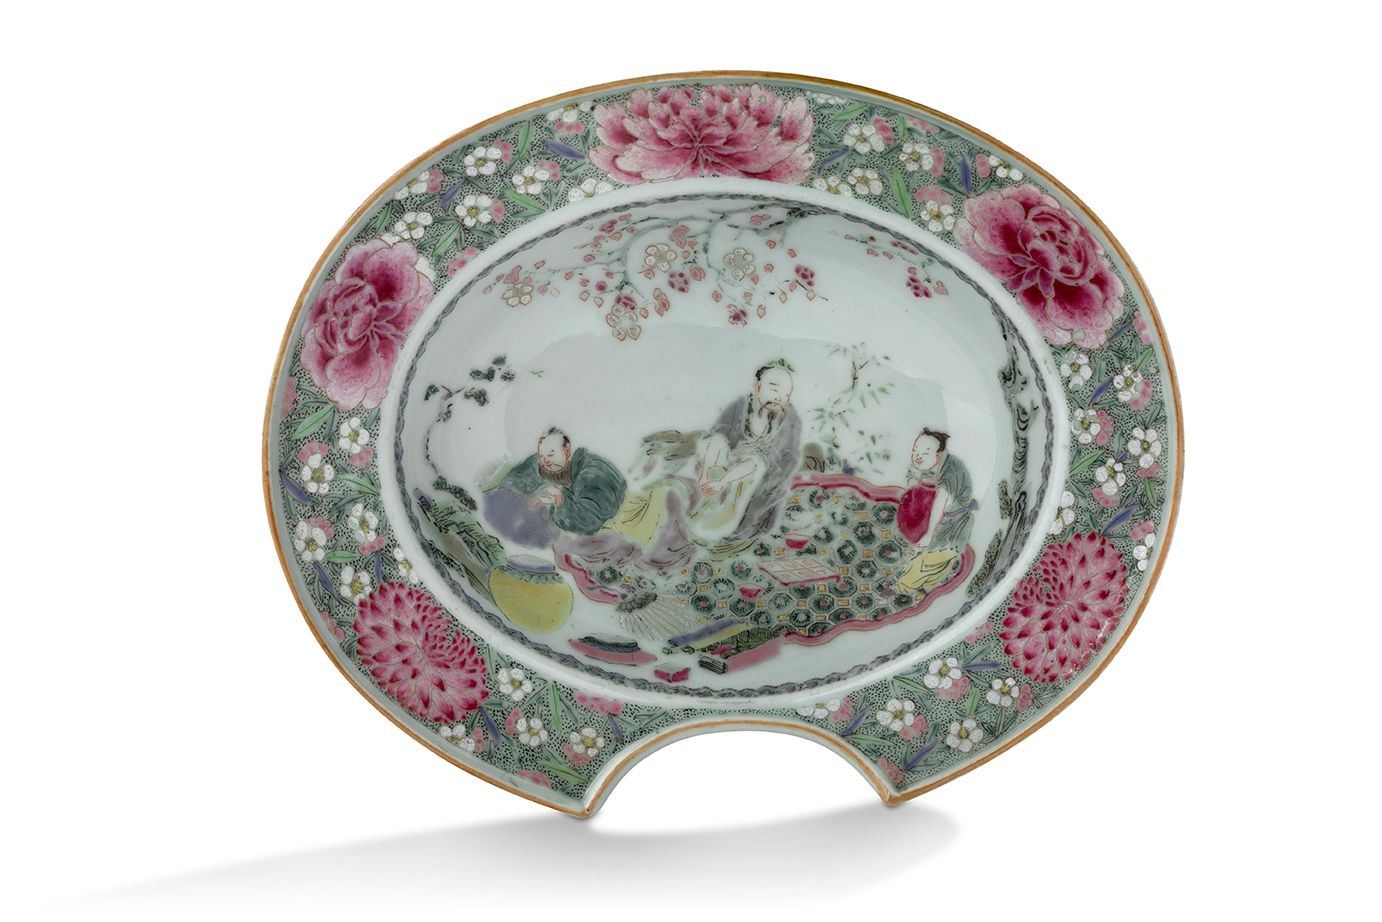 CHINE DYNASTIE QING, ÉPOQUE YONGZHENG (1722-1735) Beard dish
Famille rose porcel&hellip;